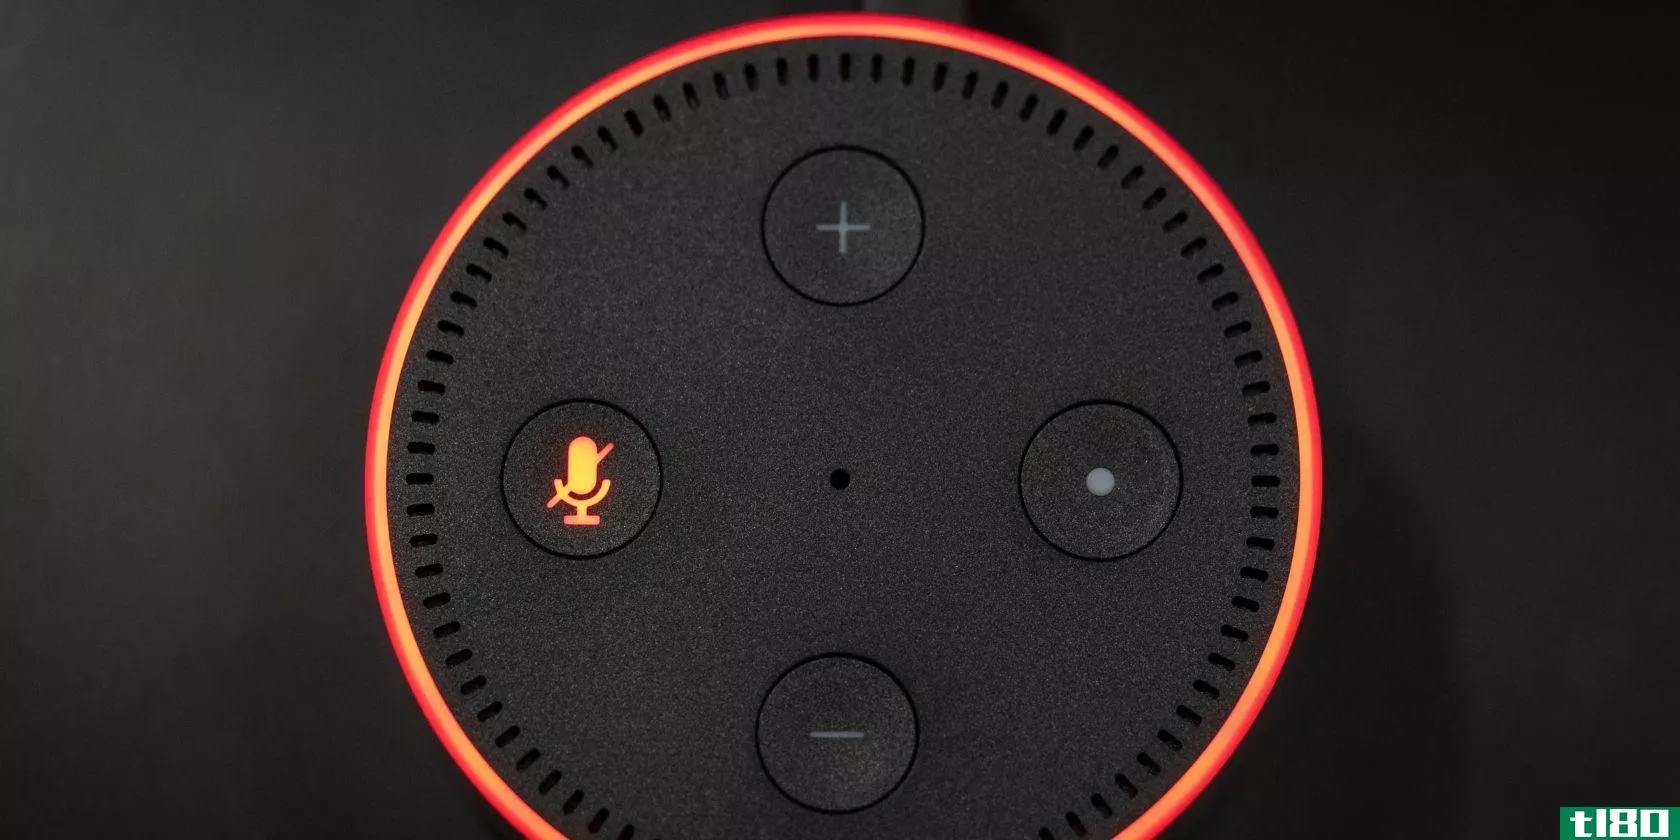 Amazon Alexa with its microphone off